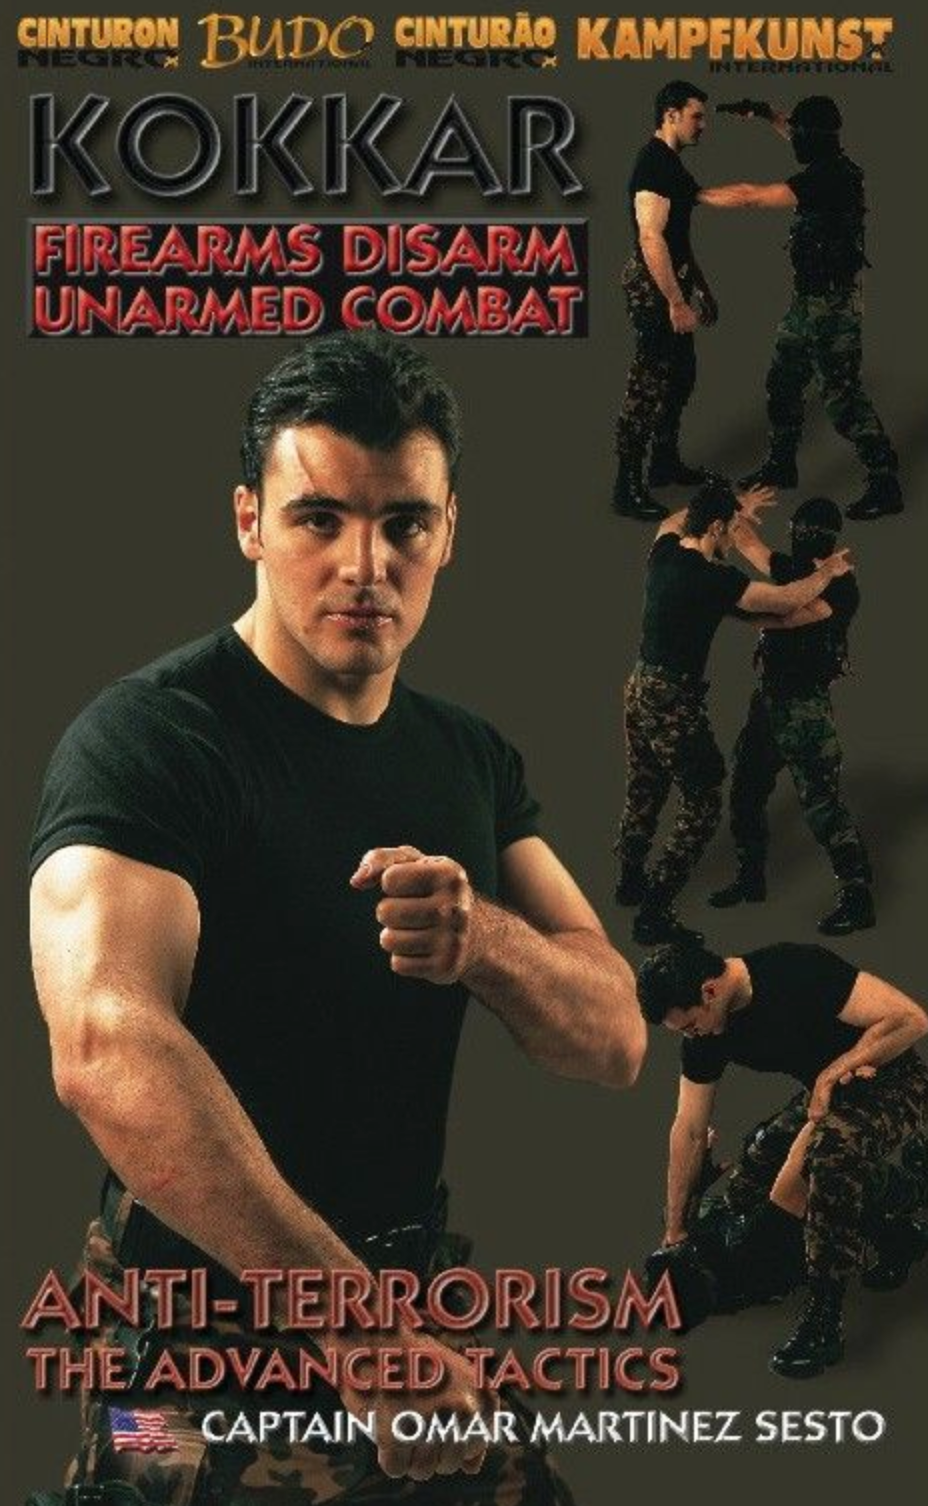 Bodyguard Dynamic Training DVD with J Eguia.